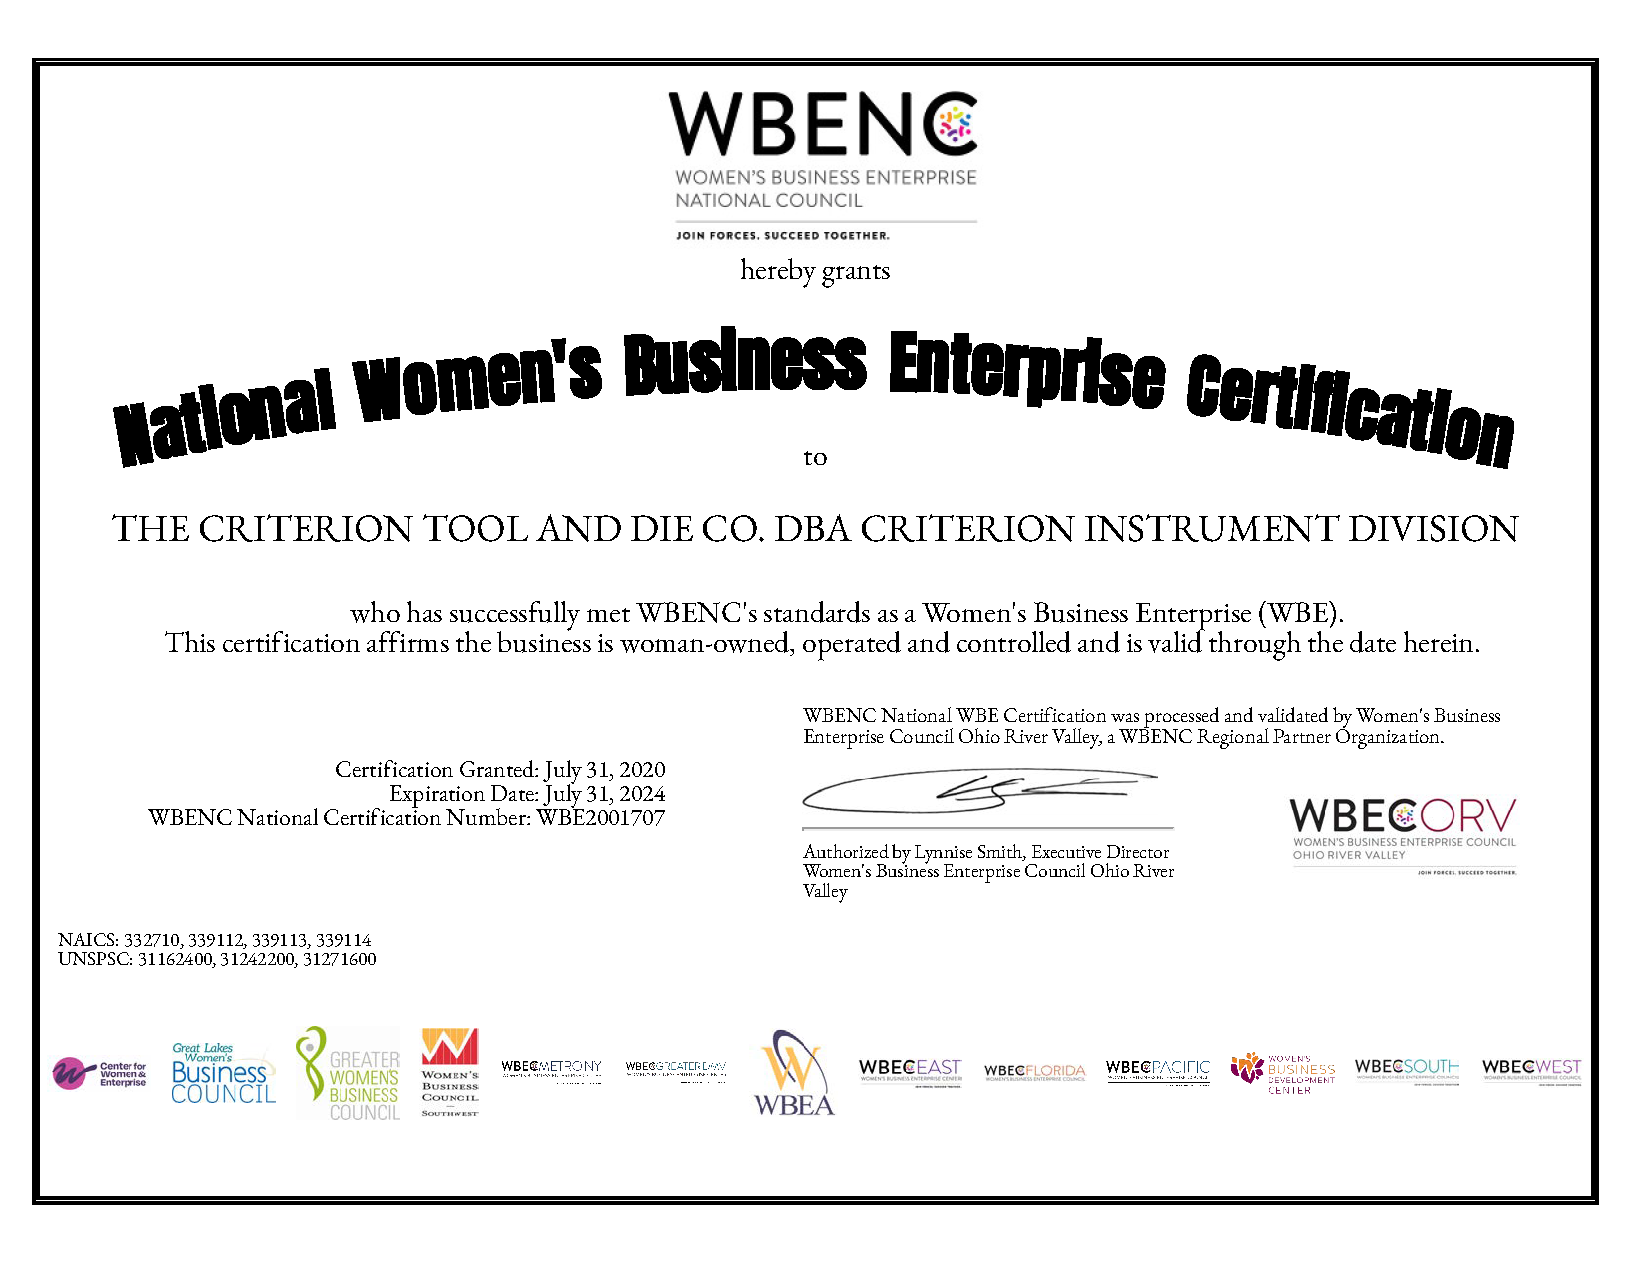 WBENC certification through 2024